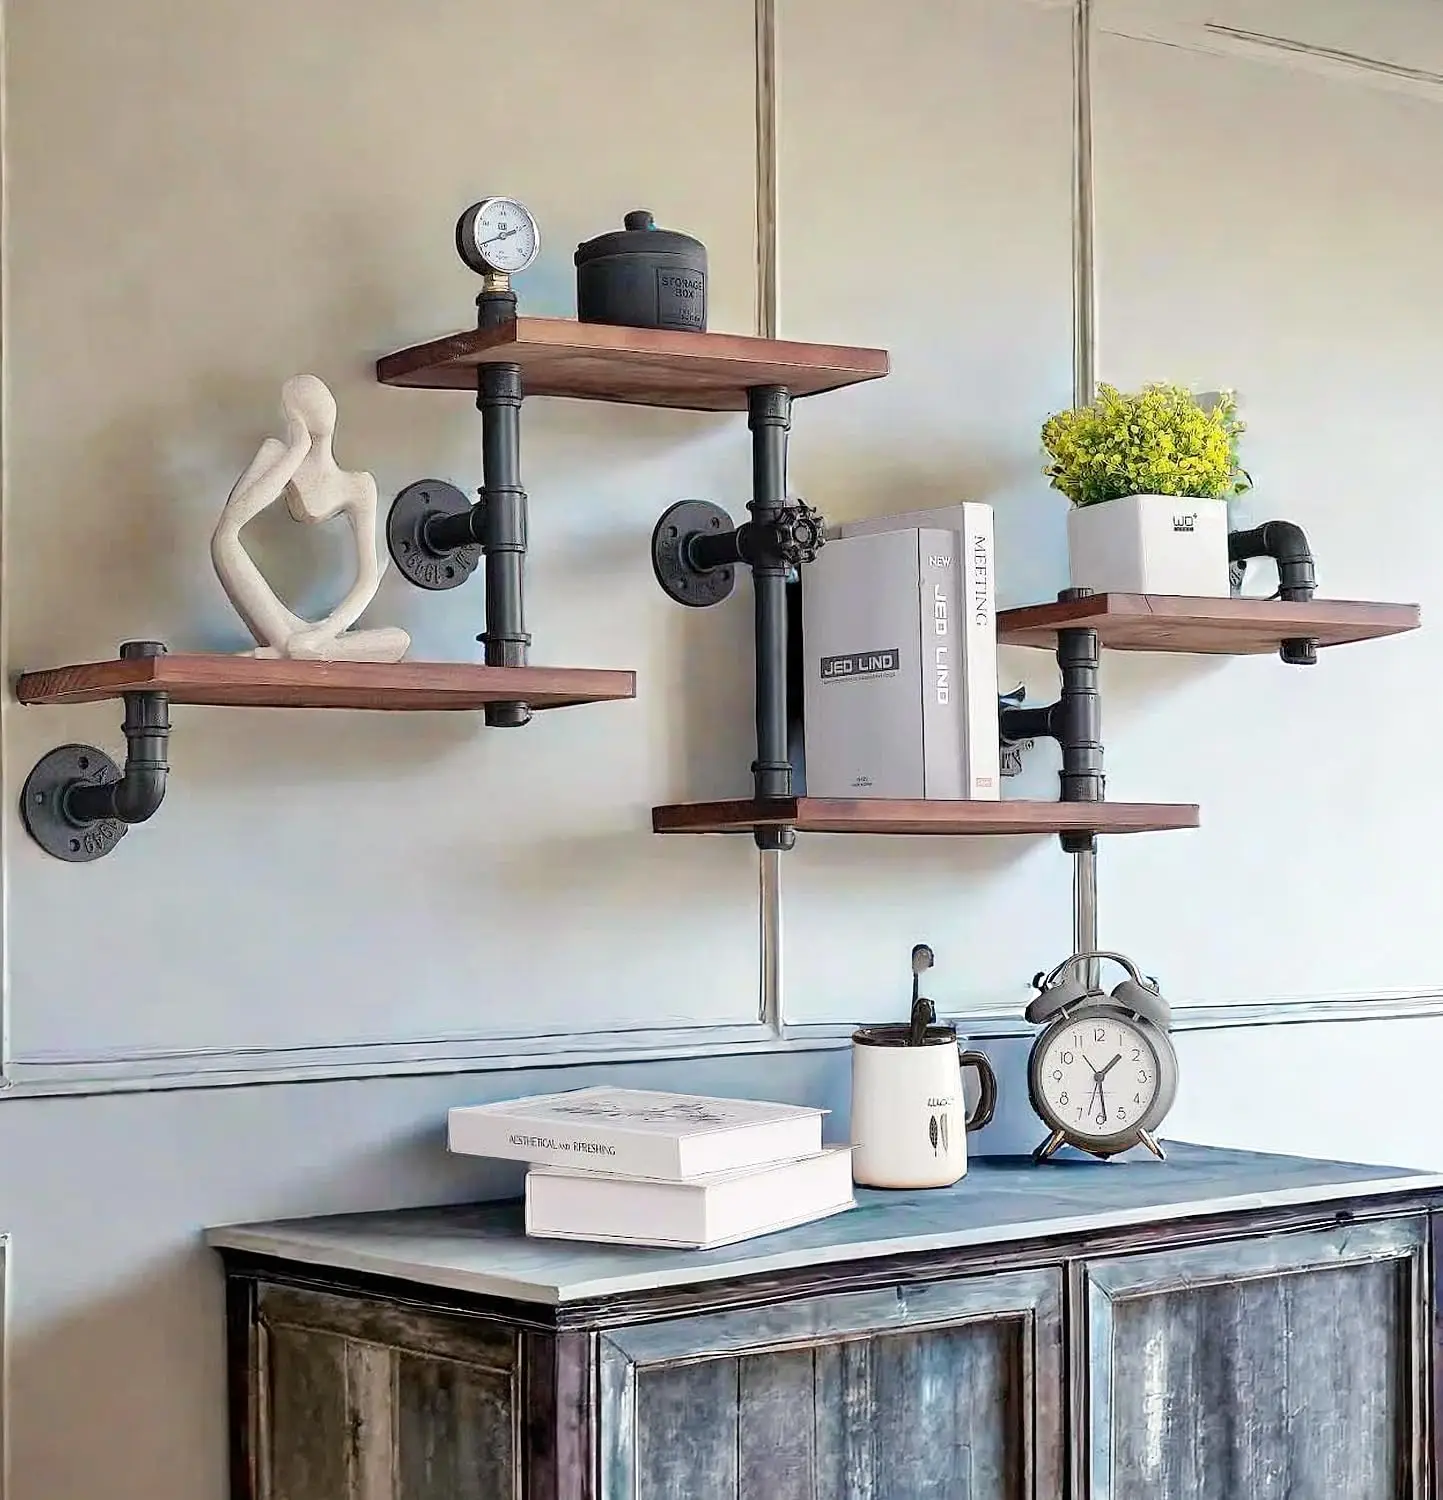 

Industrial Rustic Modern Solid Wood Ladder Pipe Wall Mounted Floating Shelves – 4 Tiers Bookshelf,DIY Storage Shelving